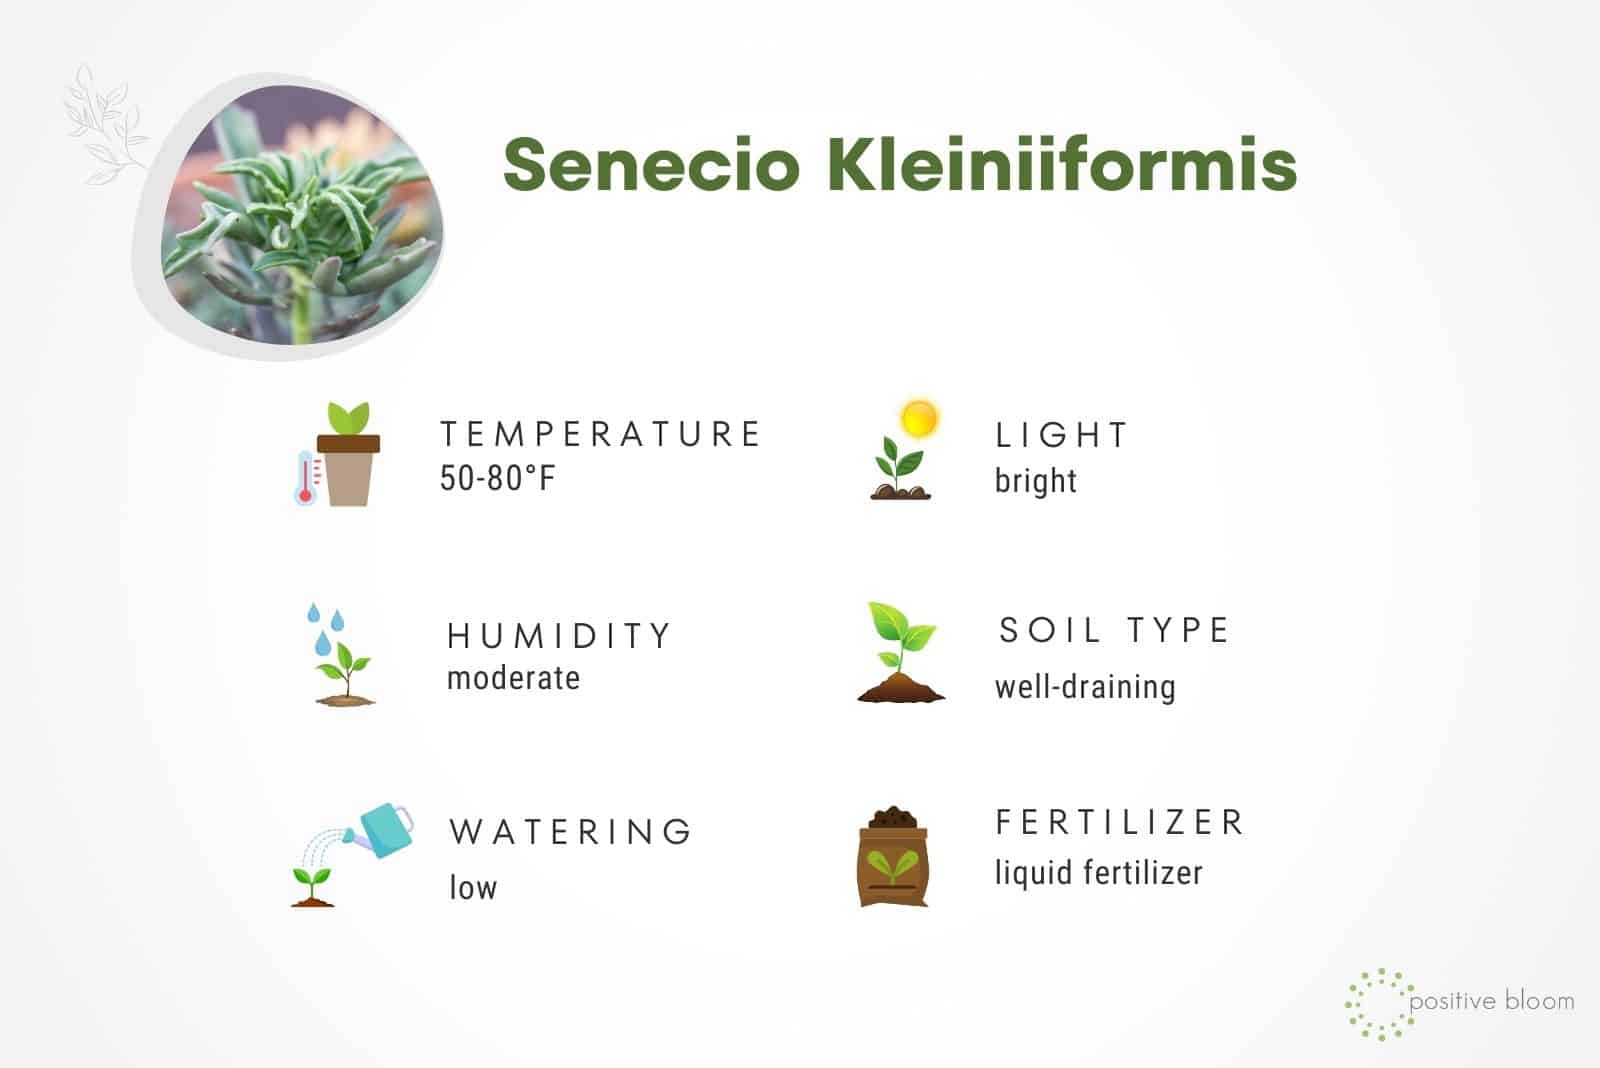 Senecio Kleiniiformis care guide